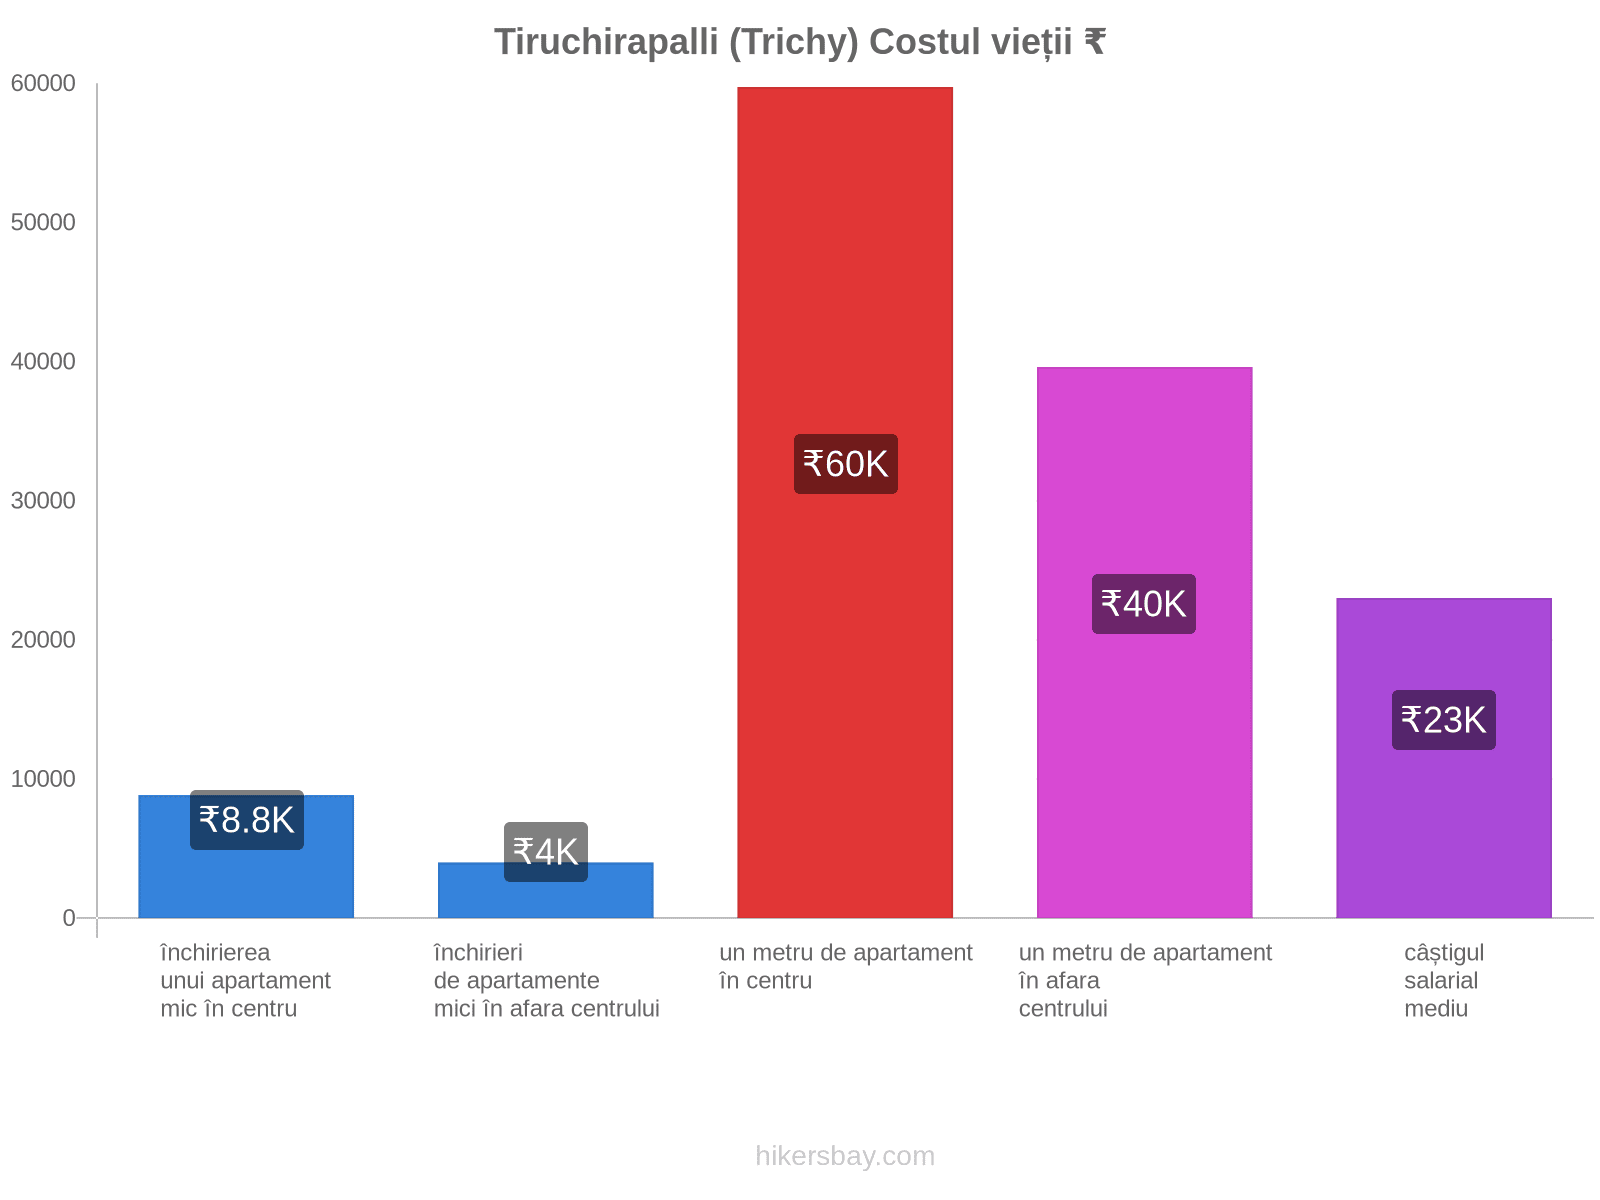 Tiruchirapalli (Trichy) costul vieții hikersbay.com